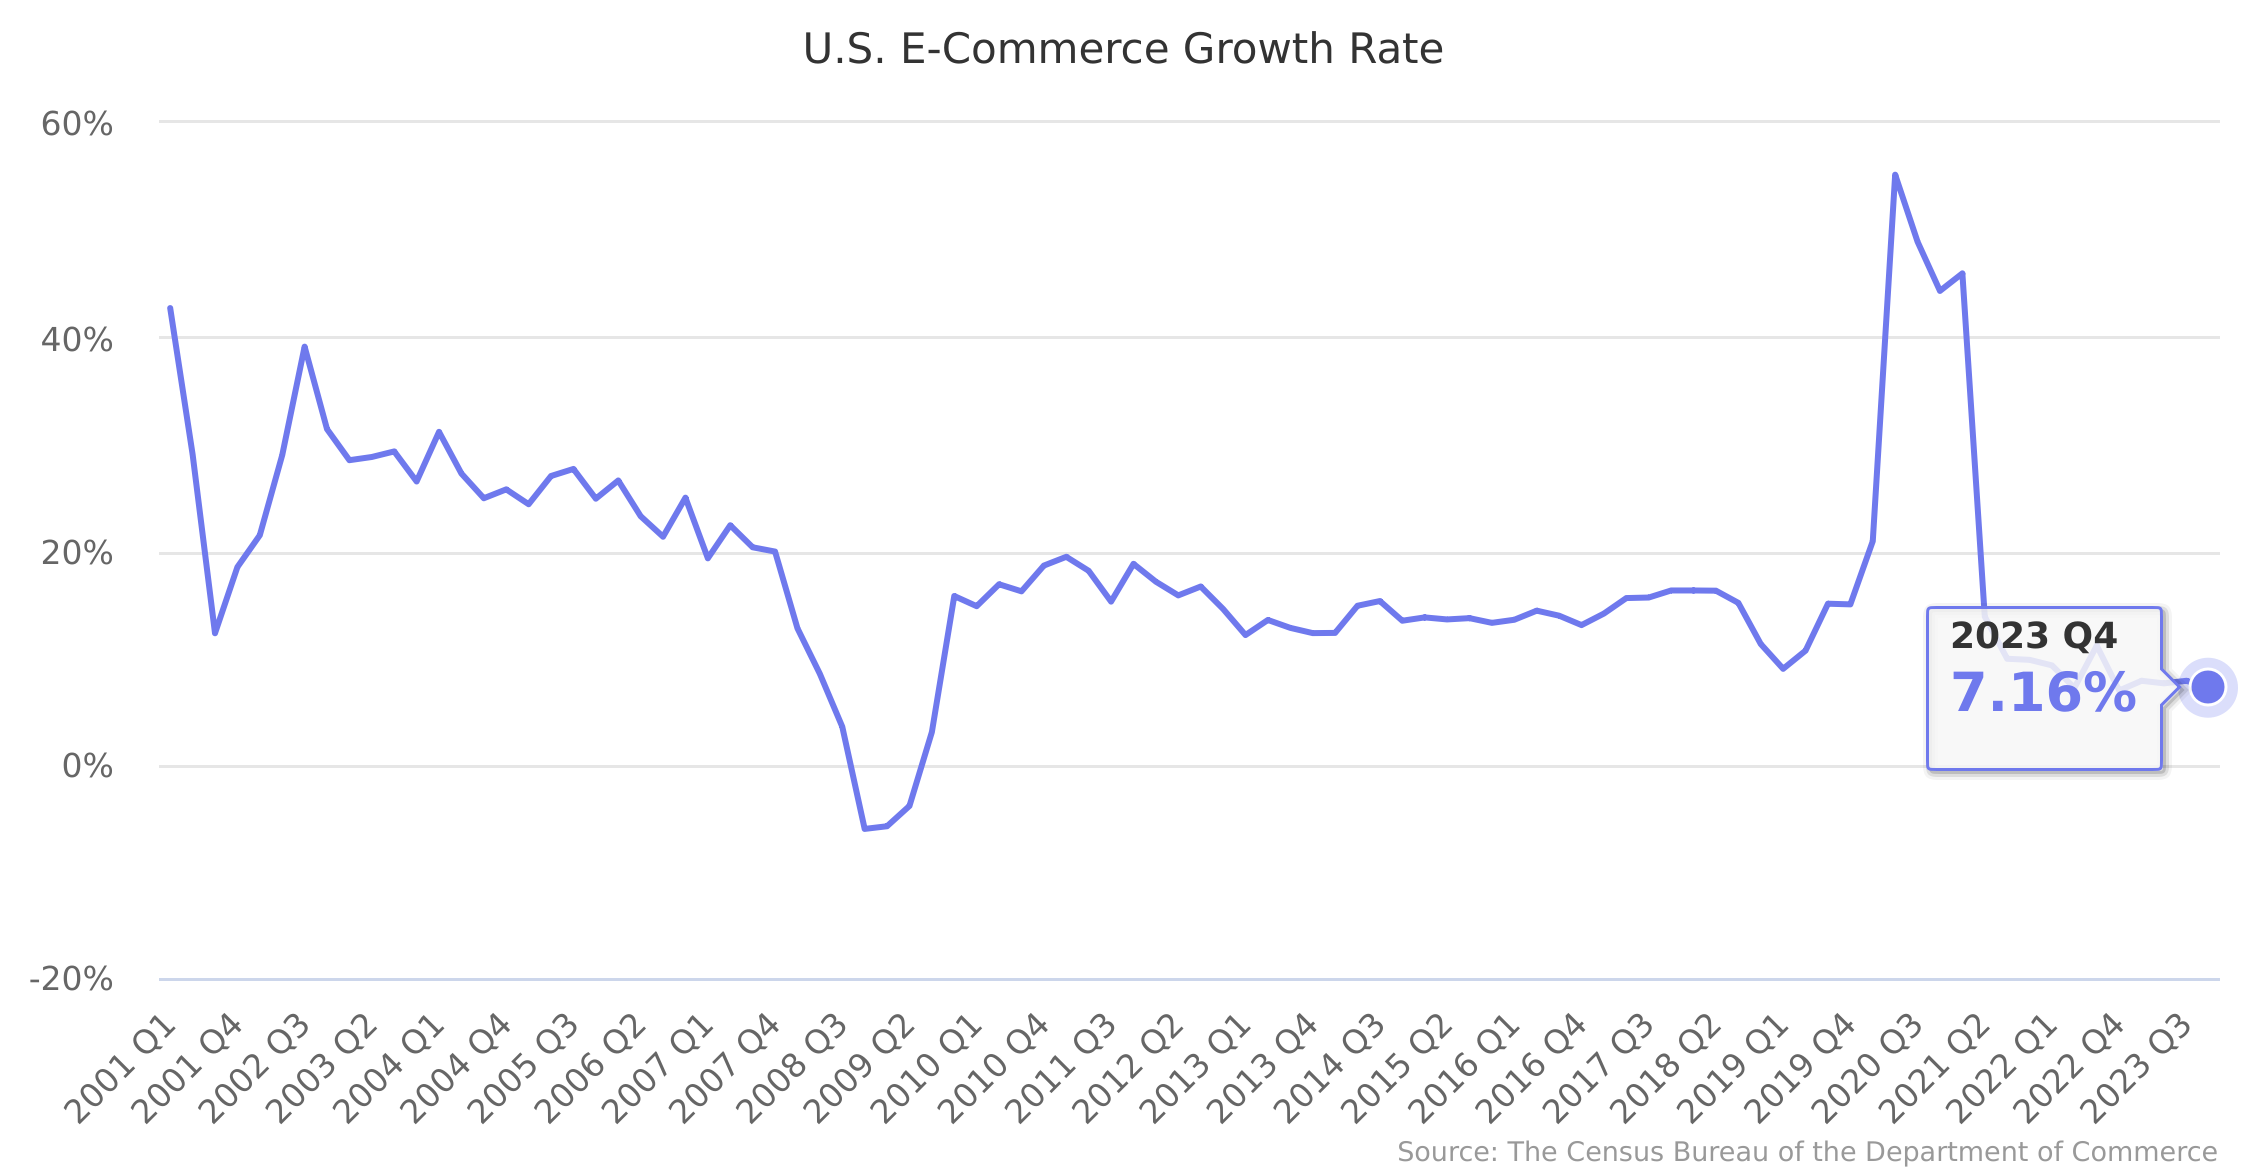 U.S. E-Commerce Growth Rate 2001-2023